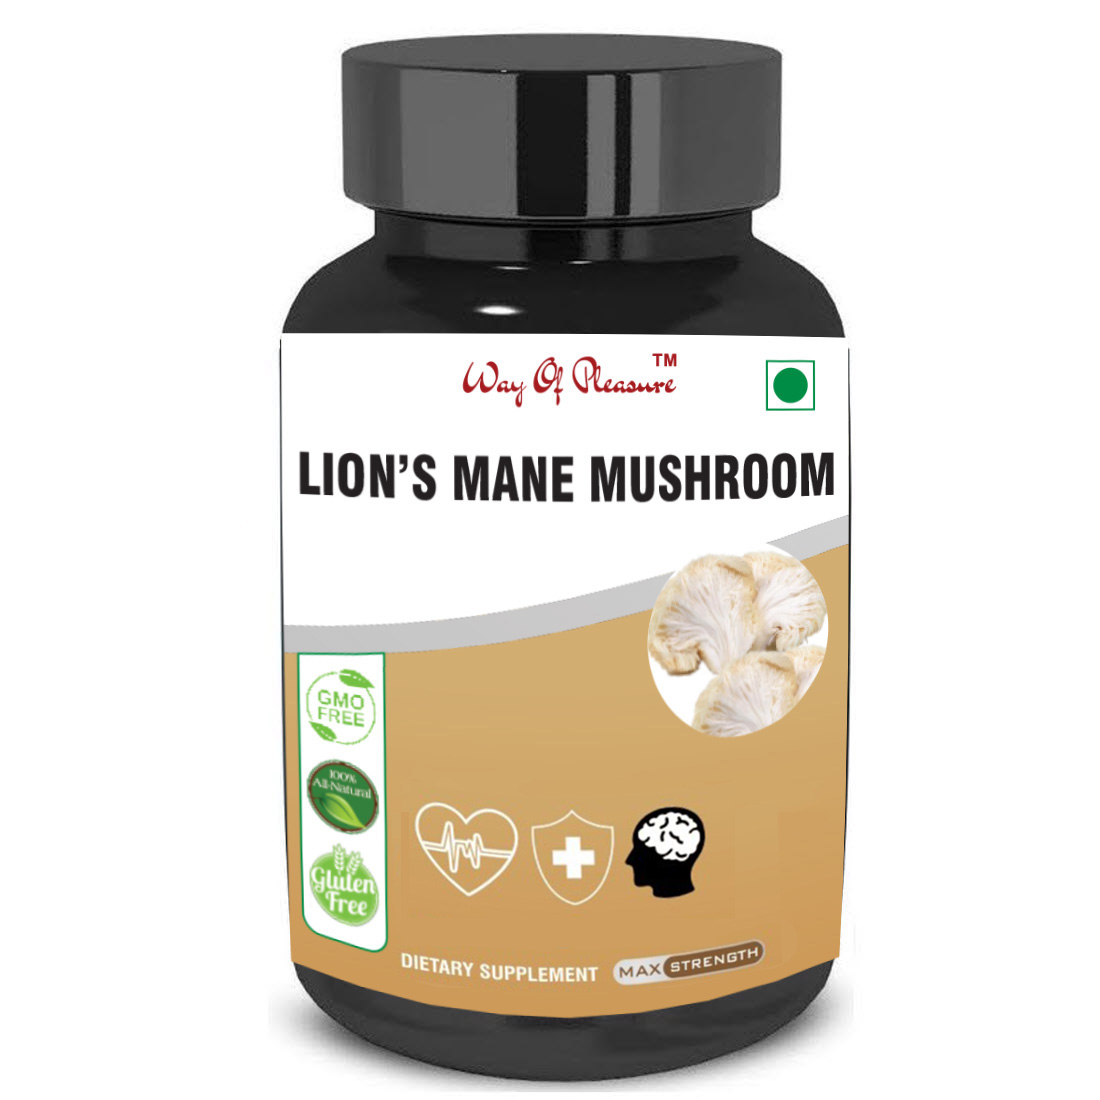 Lion's Mane Mushroom capsules